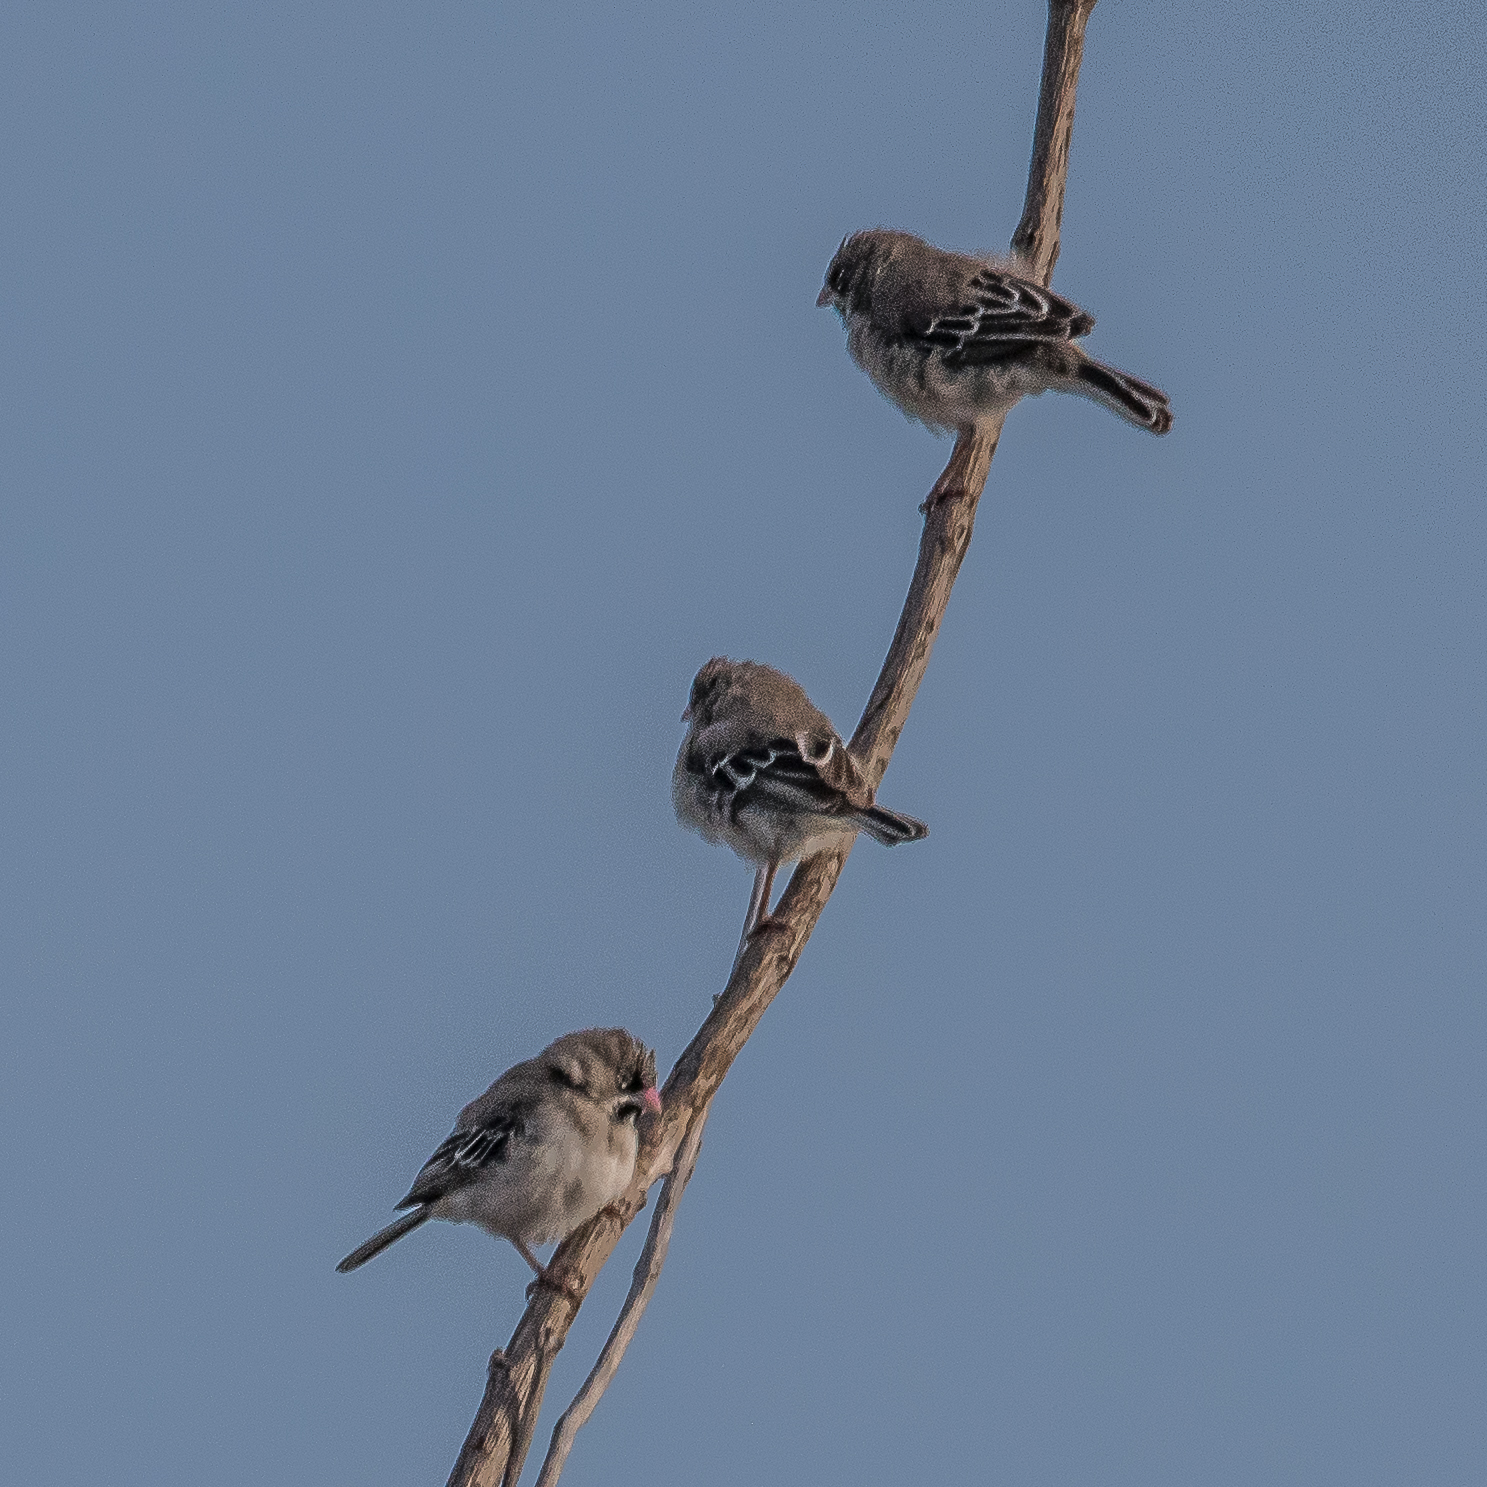 Sporopipe squameux (Scaly-feathered weaver, Sporopipes squamifrons), Parc National de Chobe, Botswana.